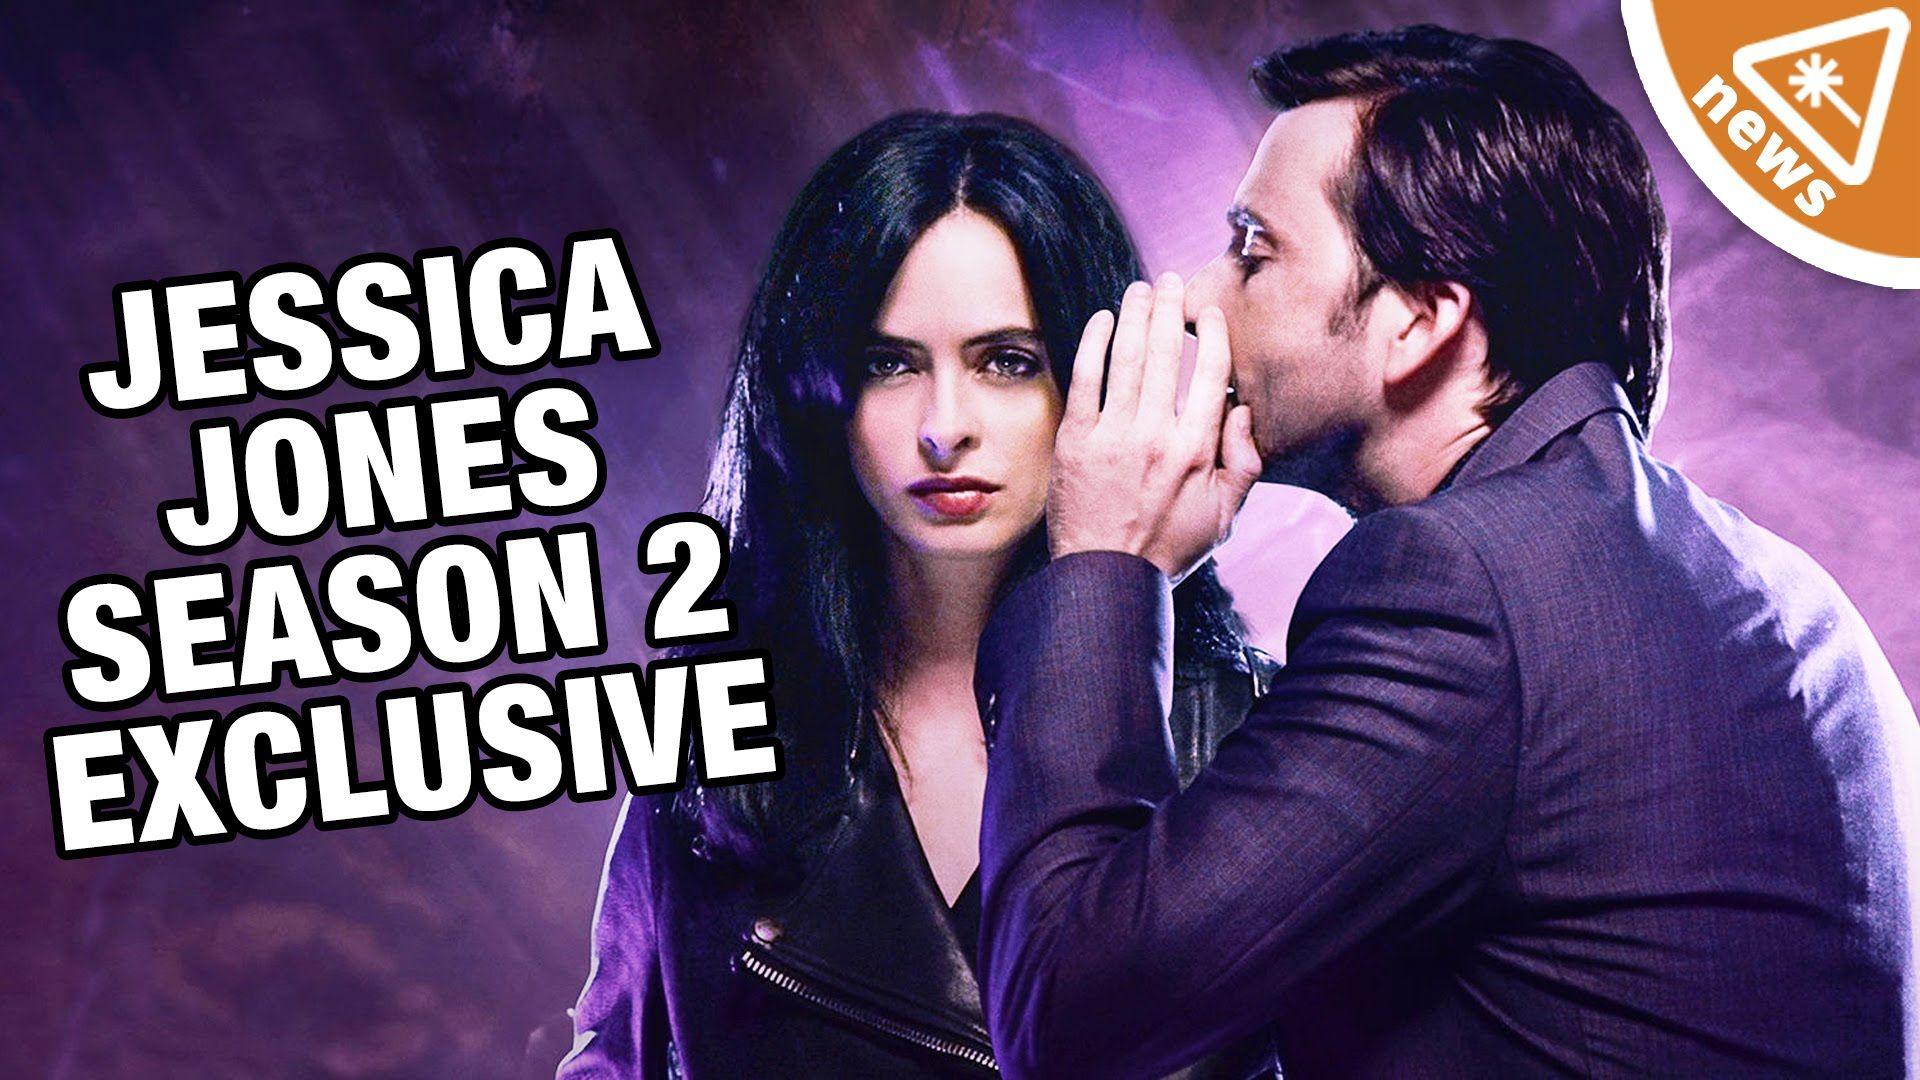 EXCLUSIVE Jessica Jones Season 2 Details Revealed! Nerdist News w